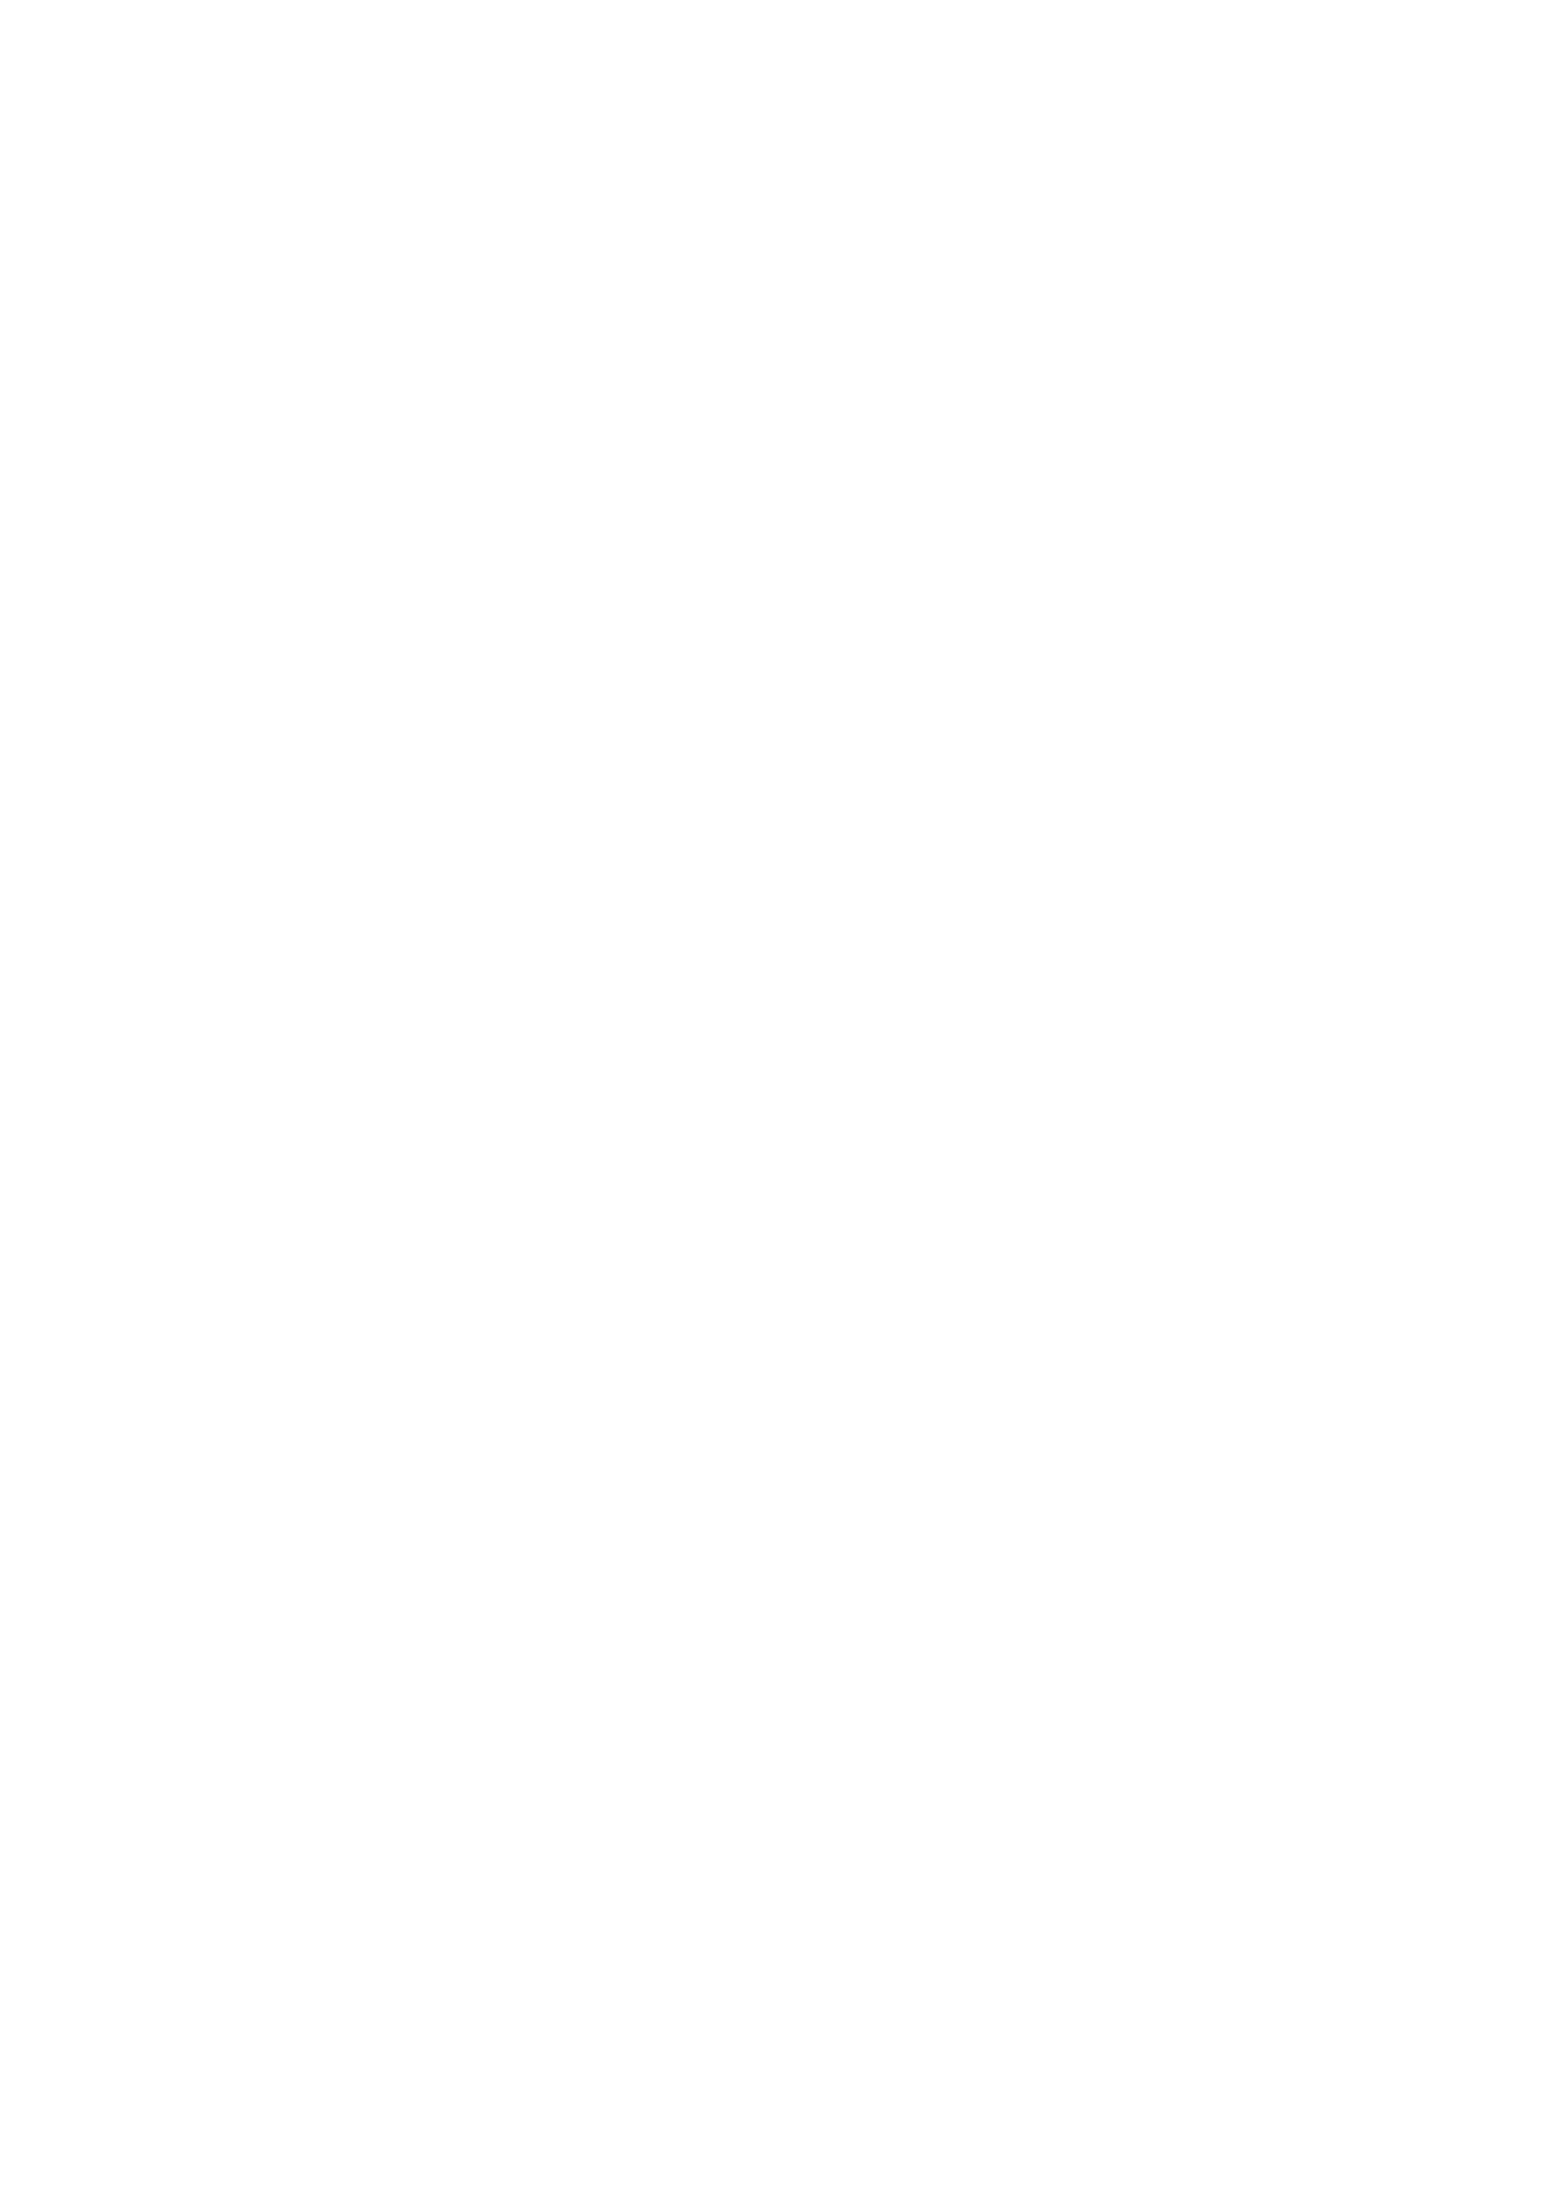 titre de l'affiche - Shakespeare or not Shakespeare